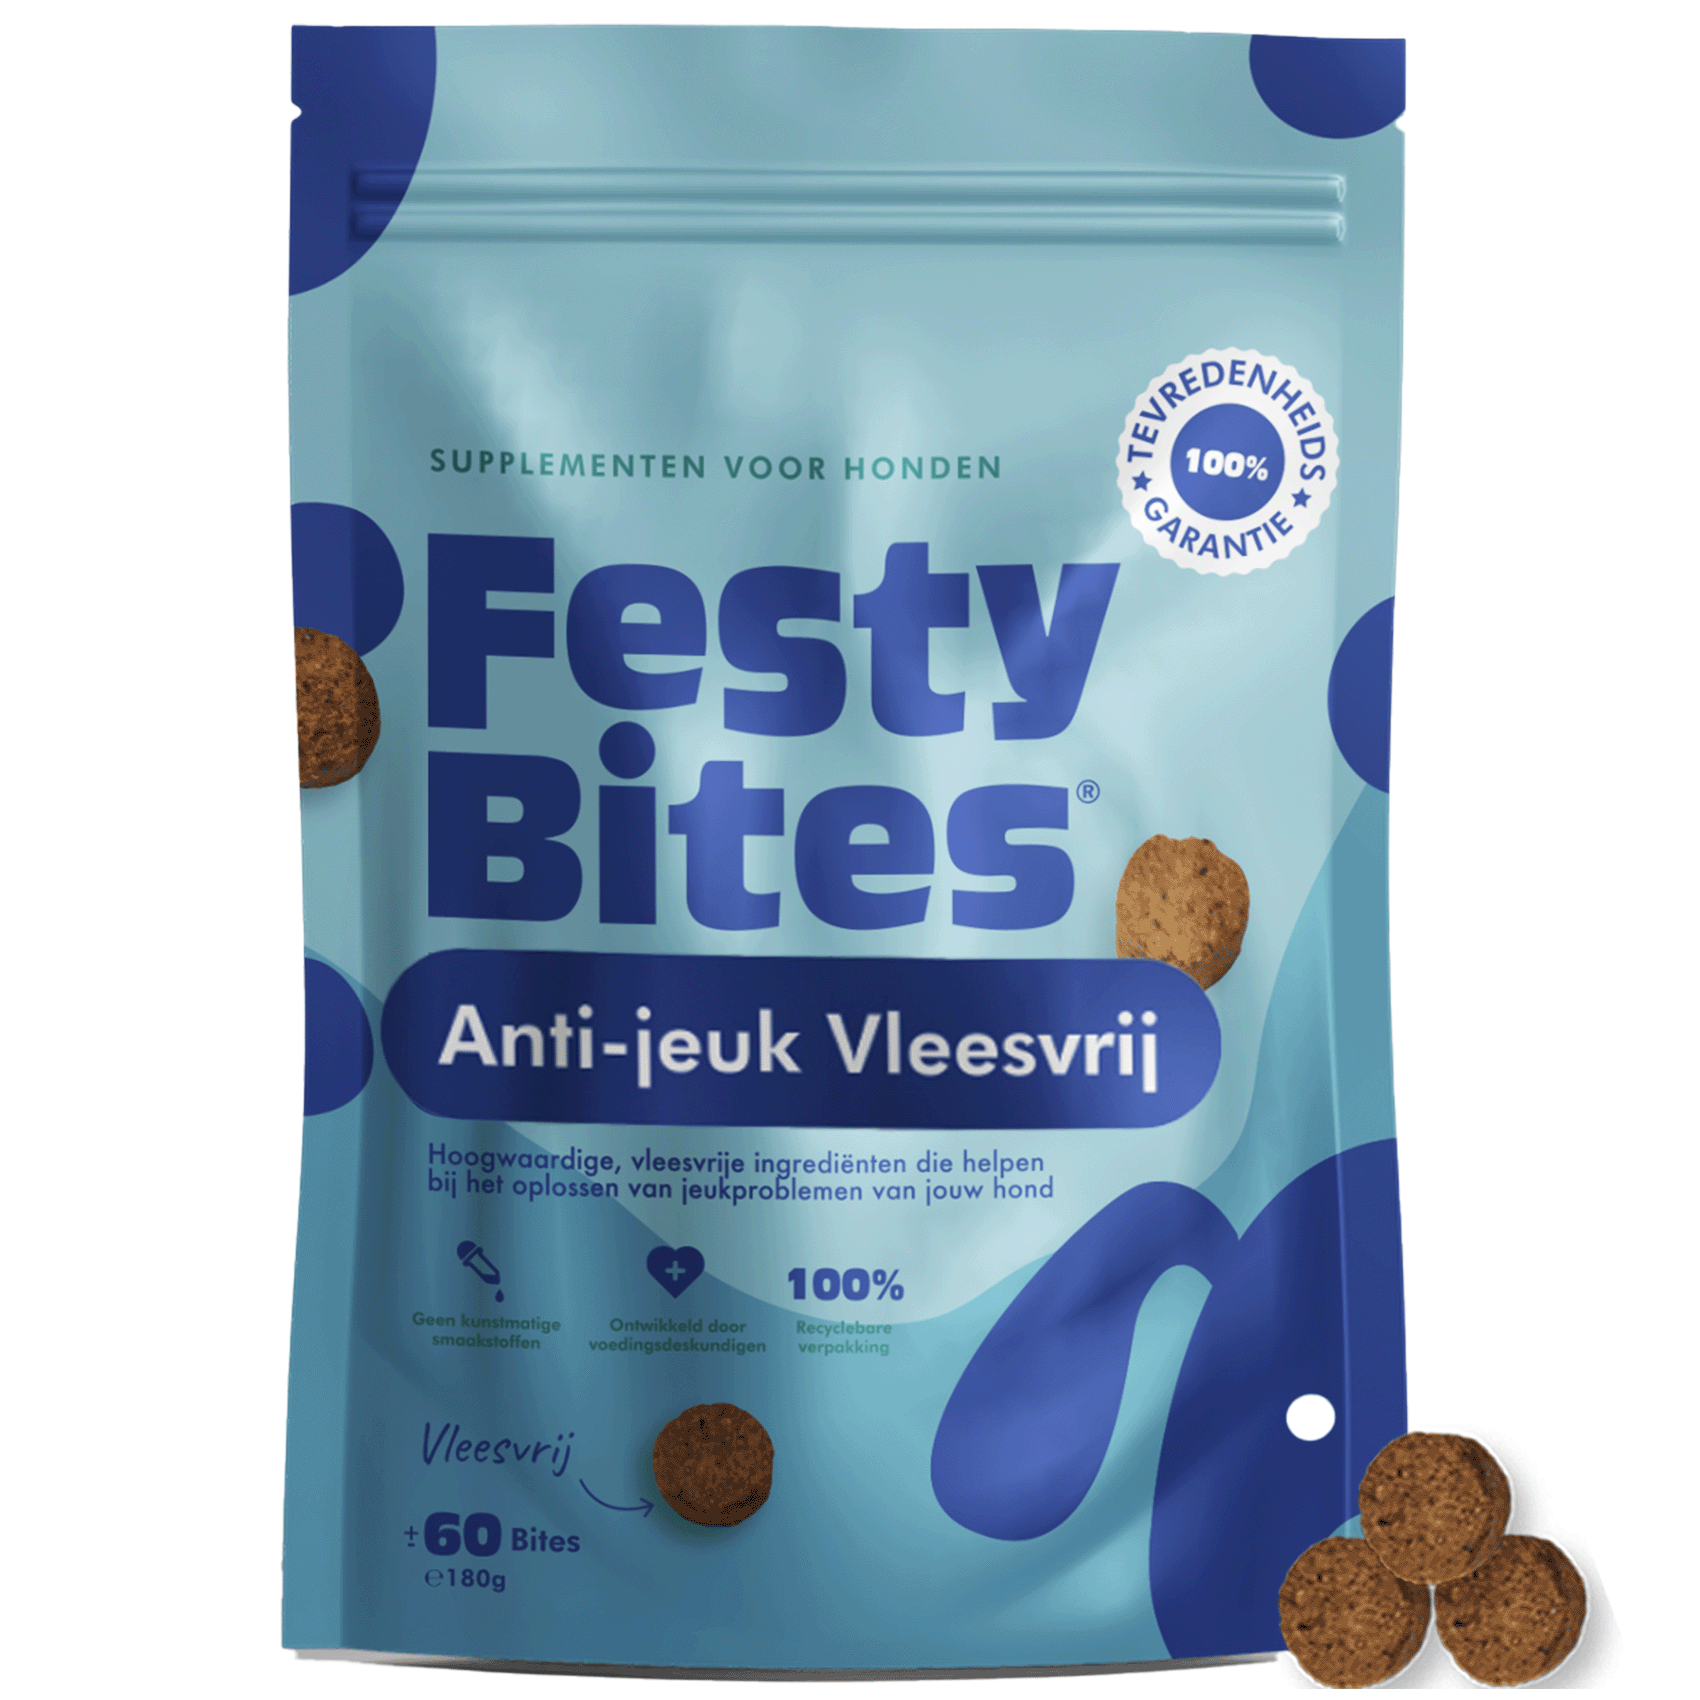 FestyBites® Probiotica Anti-jeuk vleesvrij